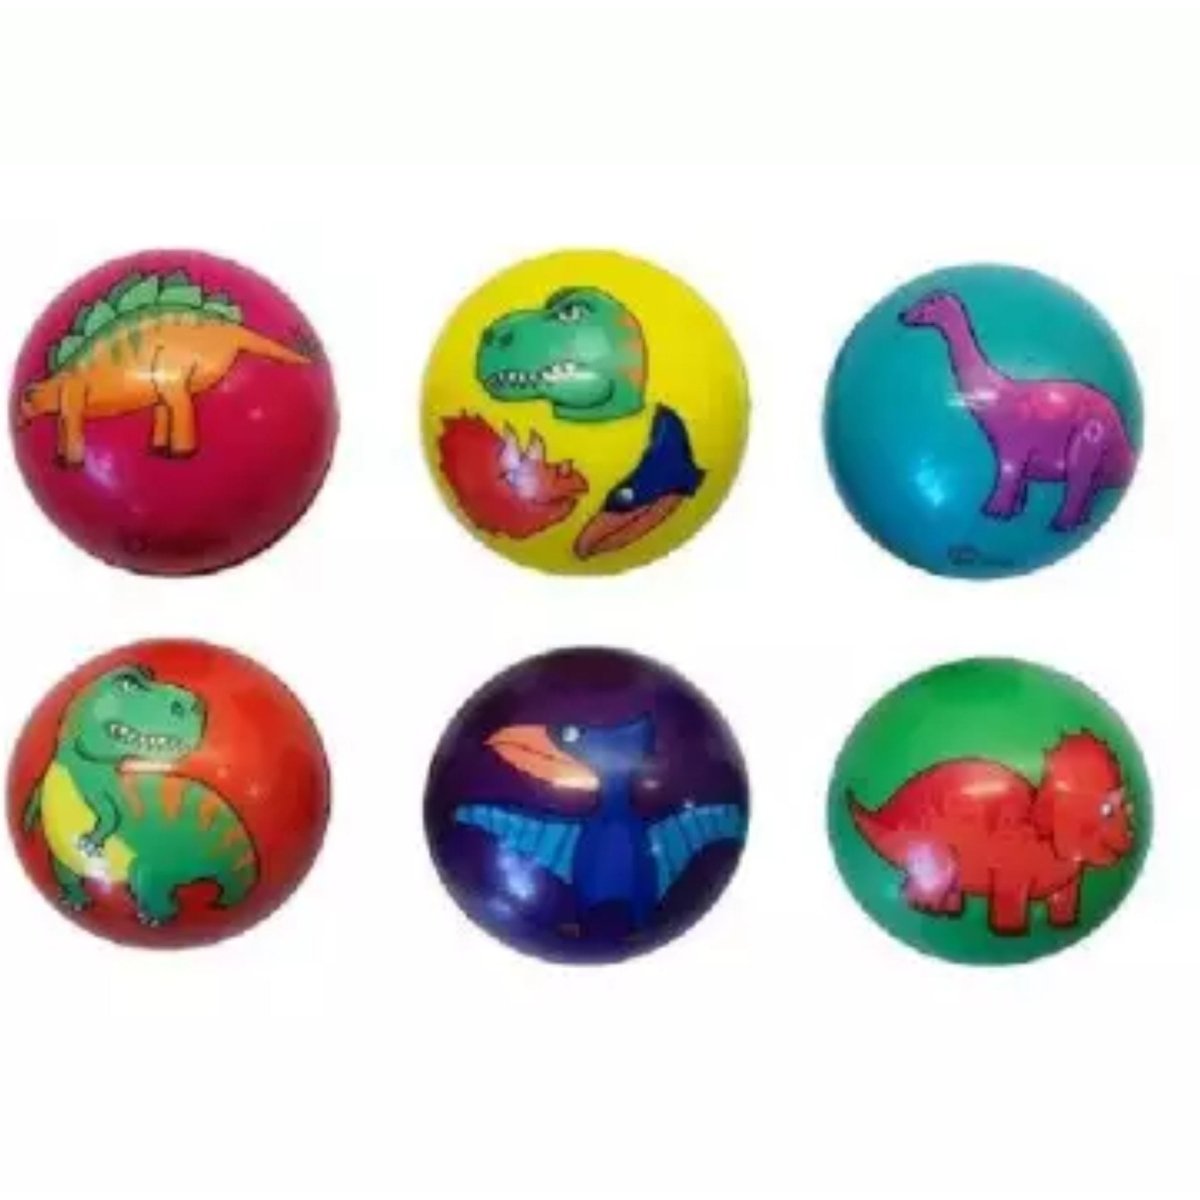 Dinosaur Stress Ball - Kids Party Craft